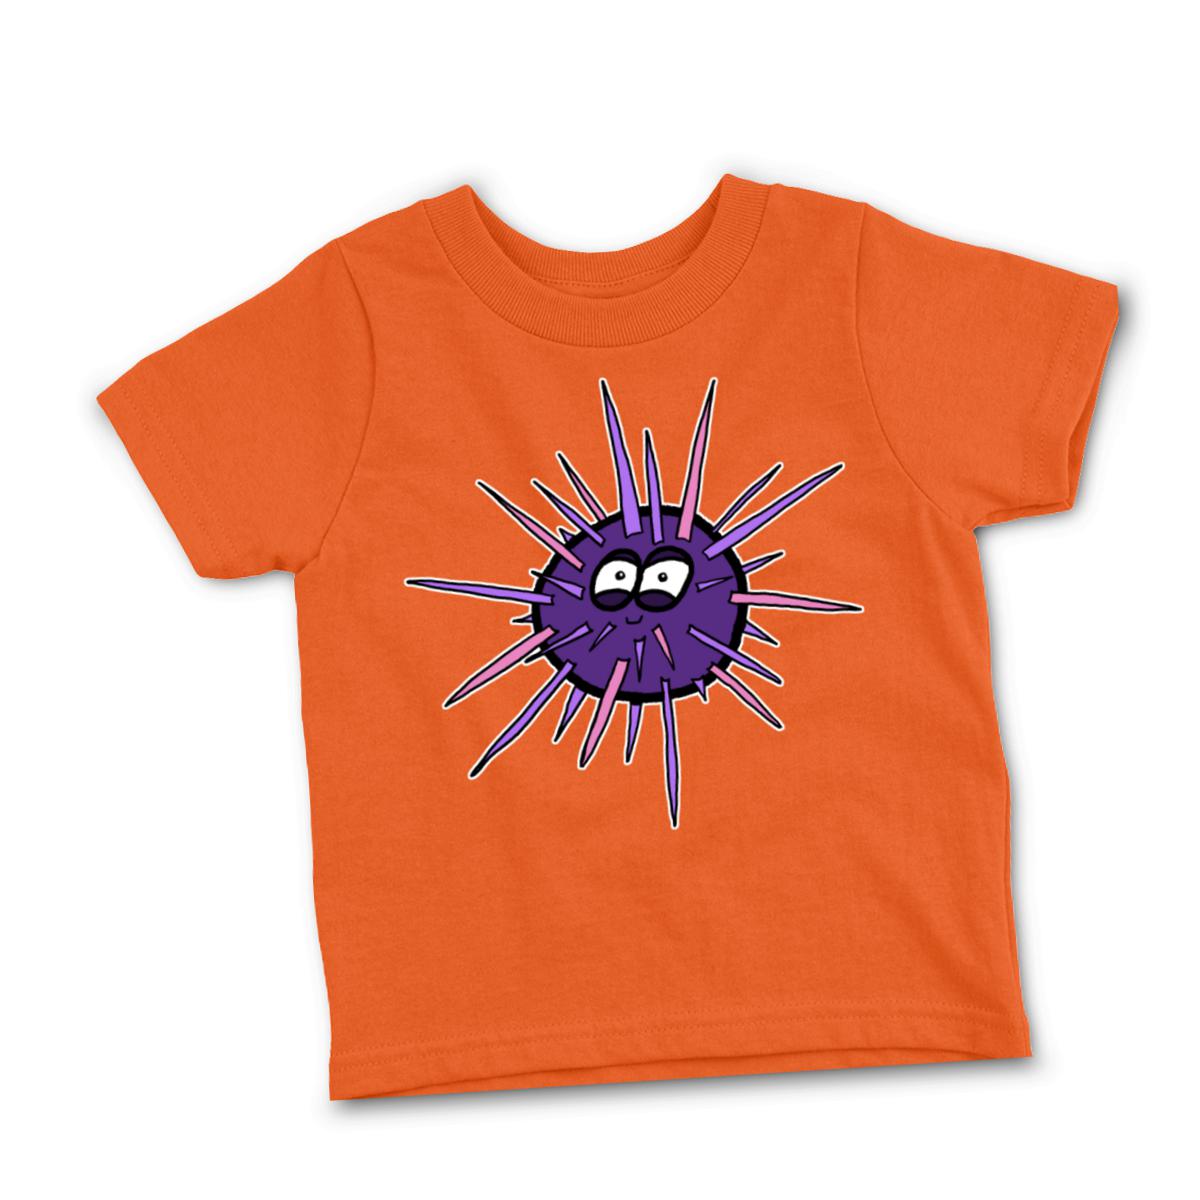 Sea Urchin Toddler Tee 4T orange